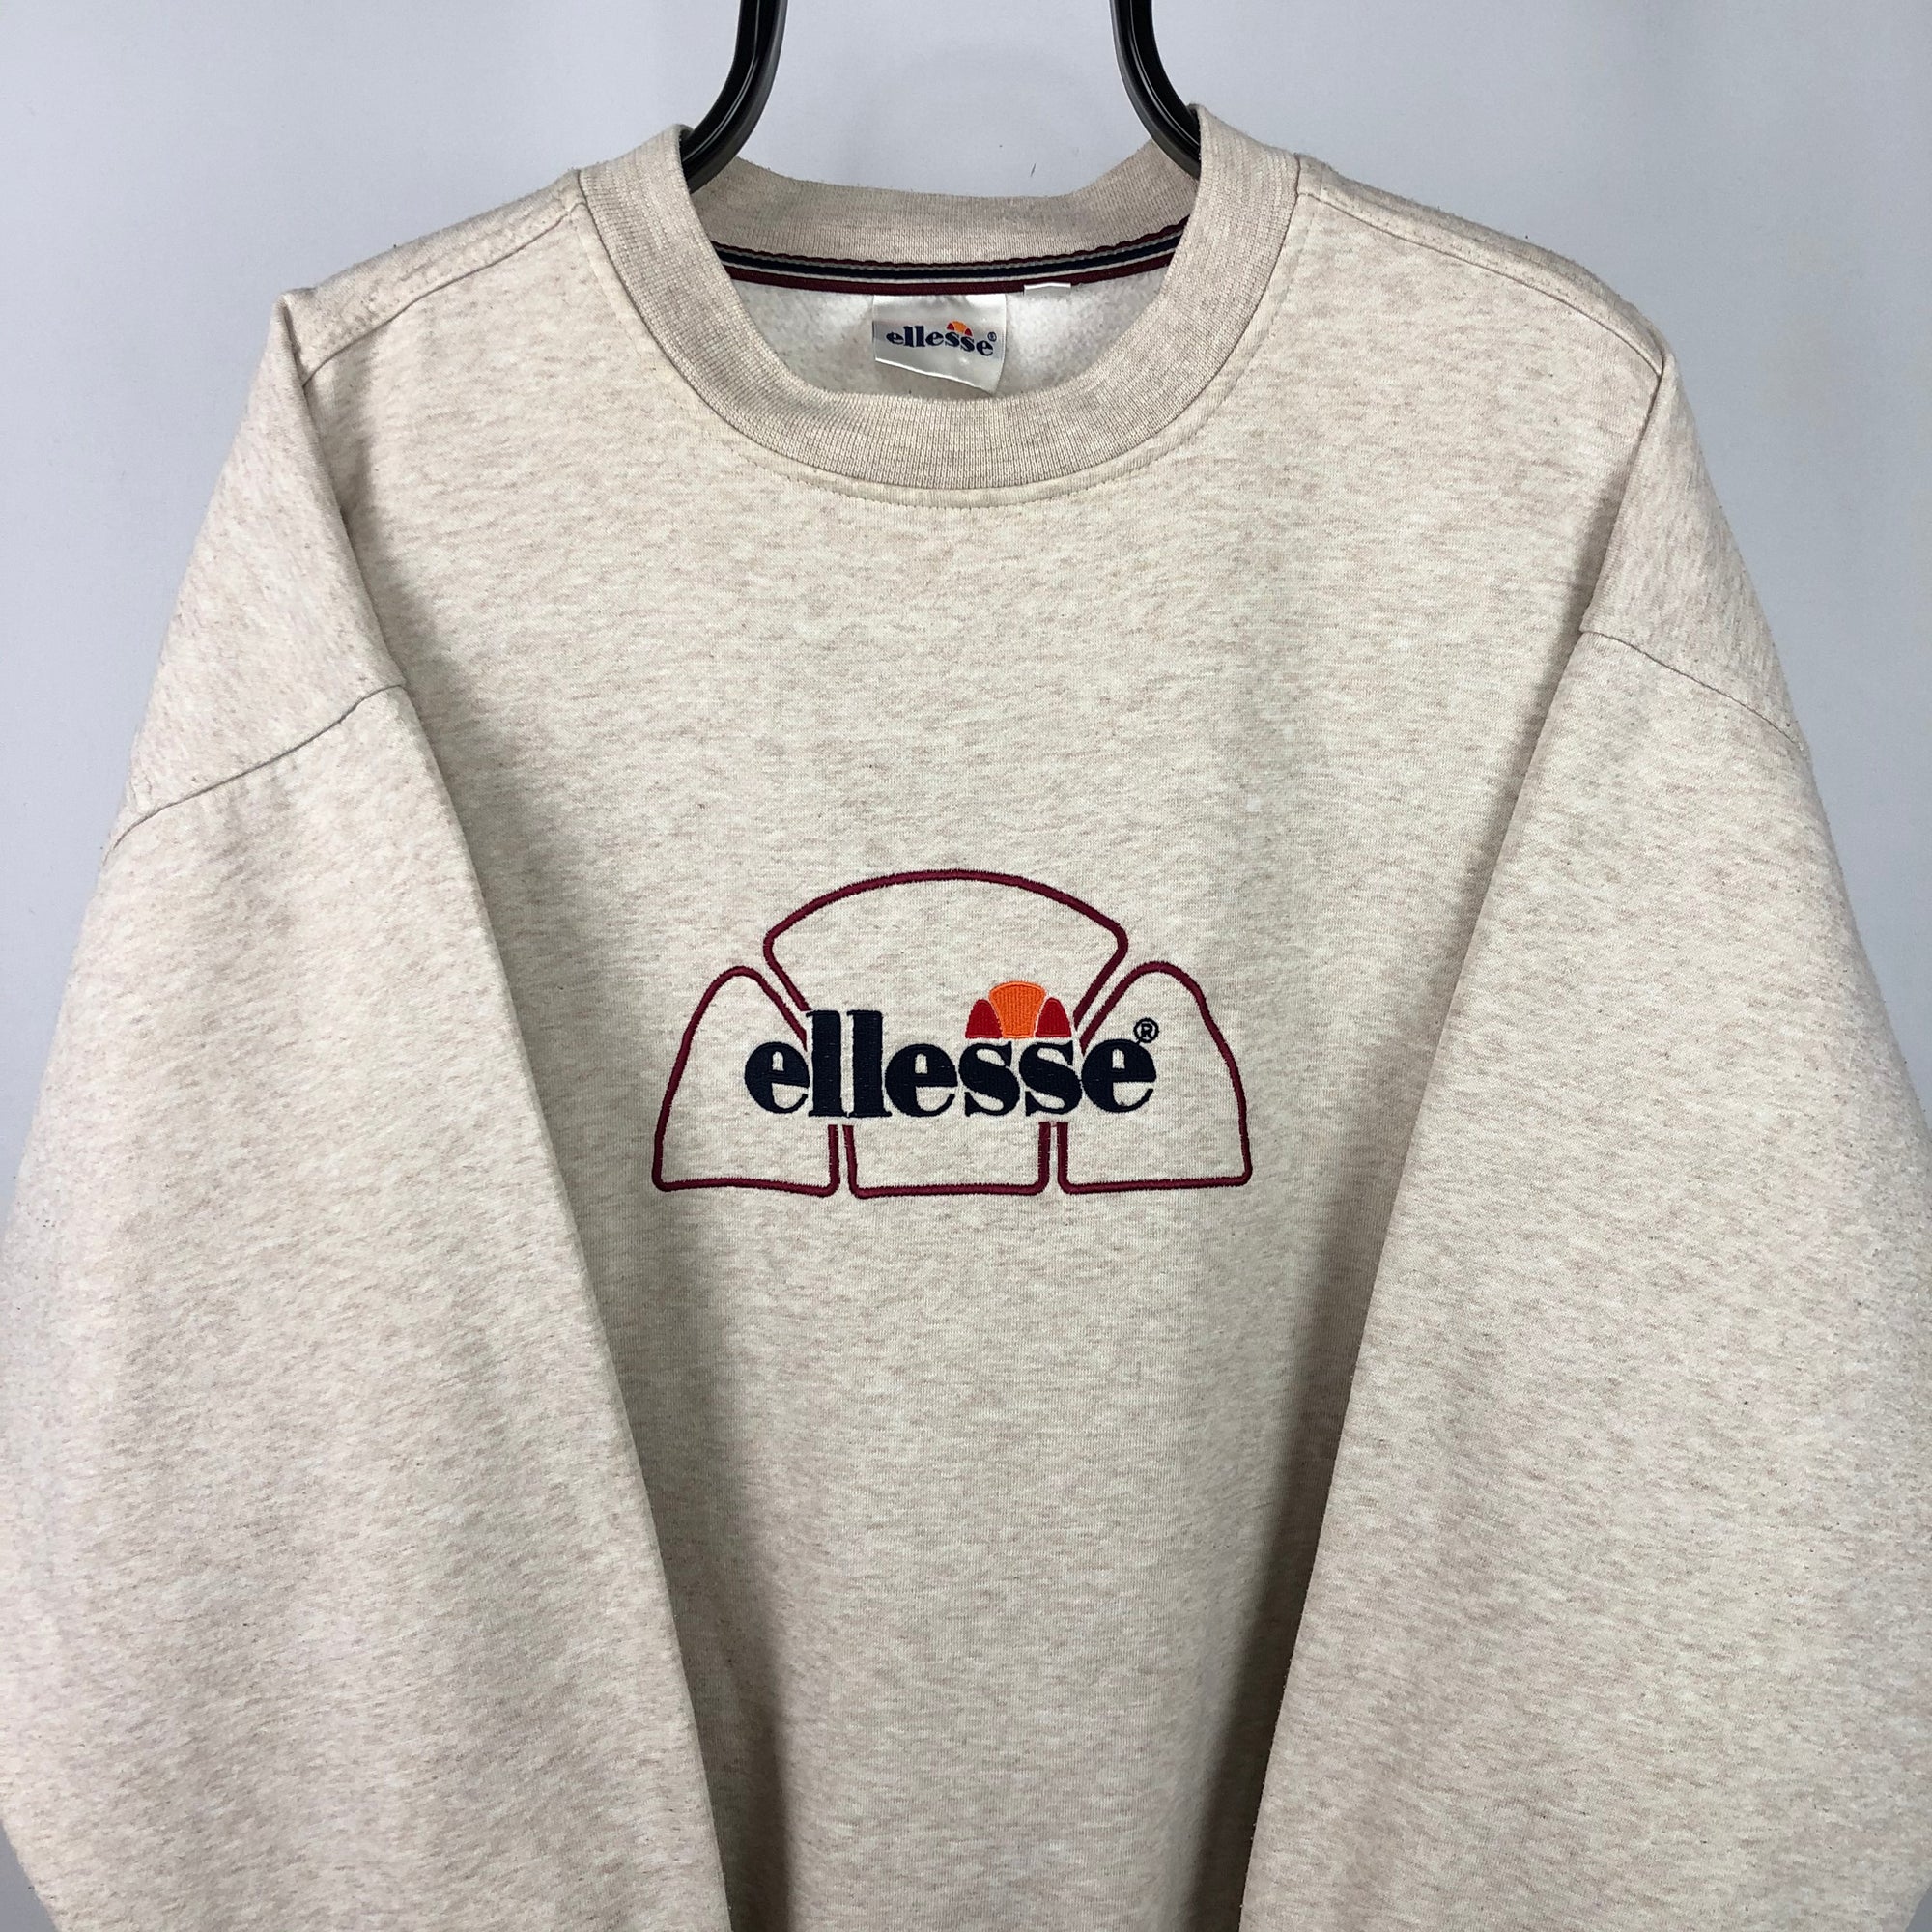 Vintage 90s Ellesse Spellout Sweatshirt in Brown/Grey - Men's Large/Women's XL